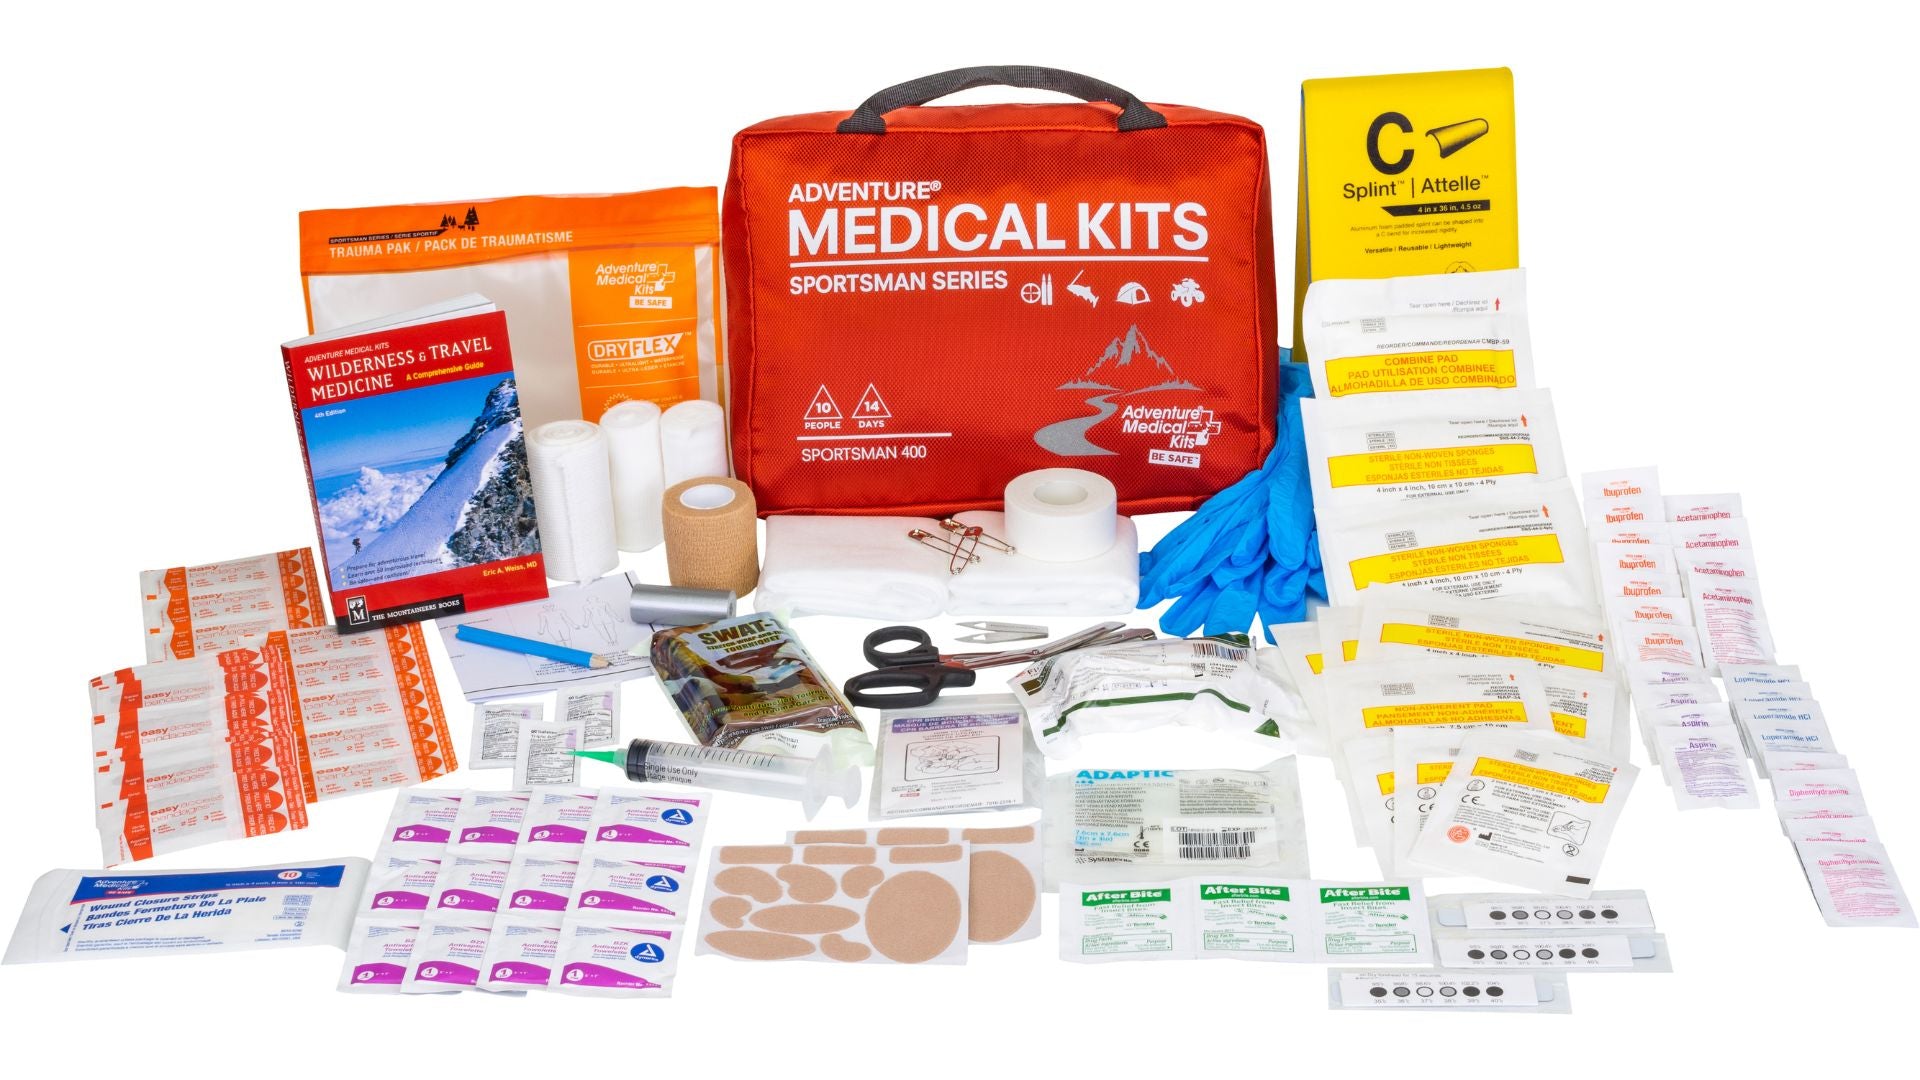 Recharged Sportsman Series Medical Kits - May 30, 2019